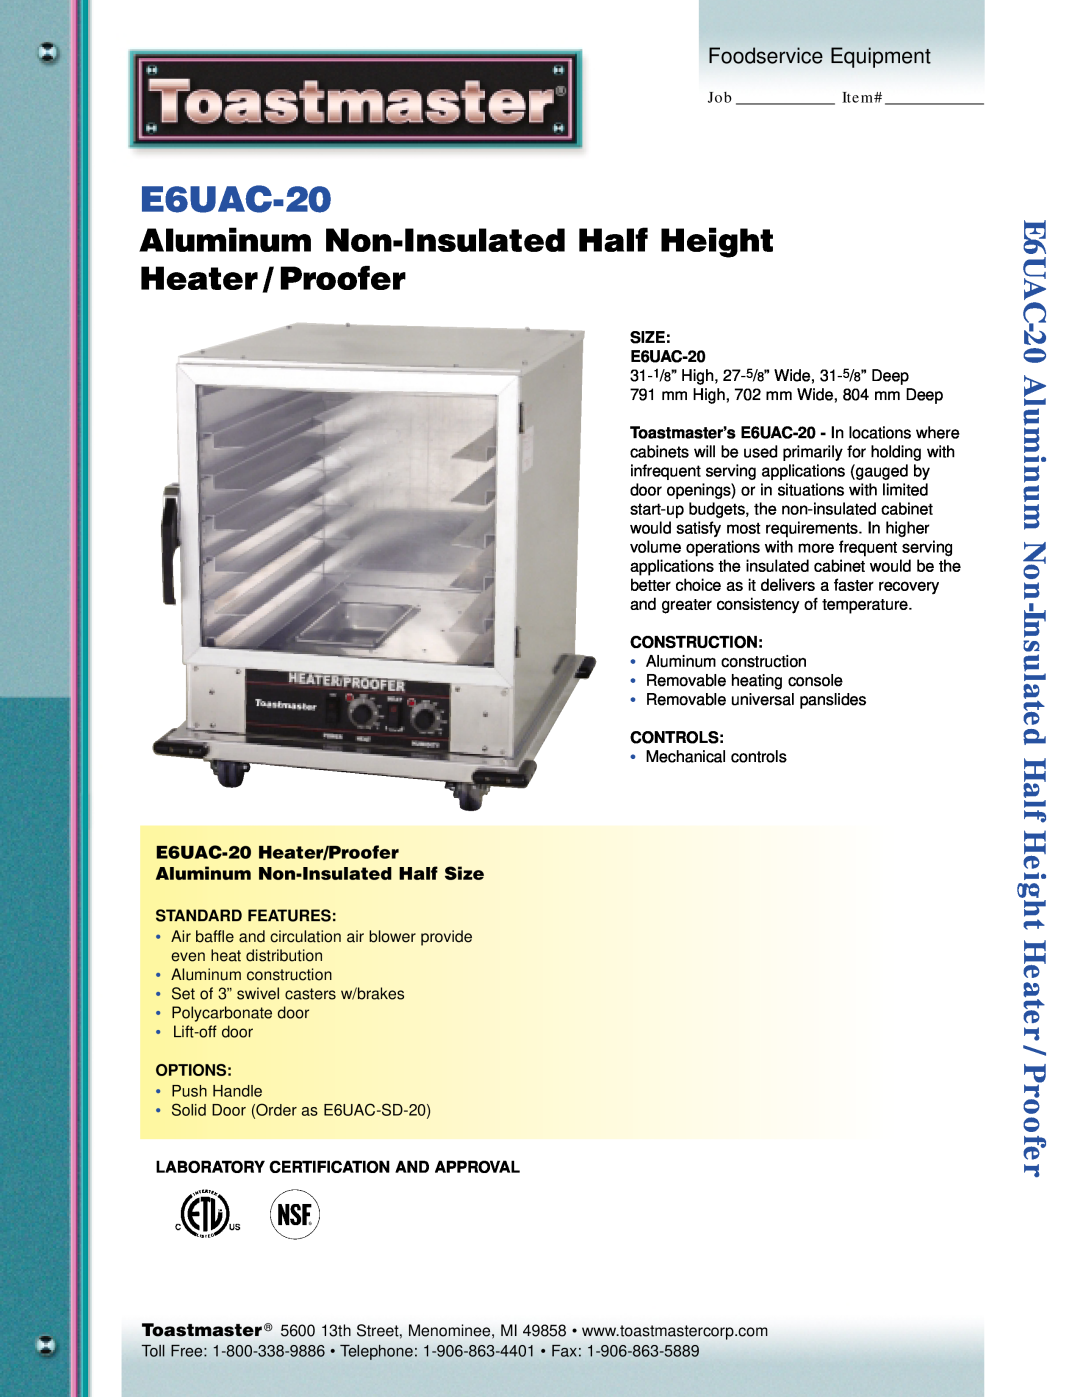 Toastmaster manual E6UAC-20Heater/Proofer, Aluminum Non-InsulatedHalf Size, Foodservice Equipment 